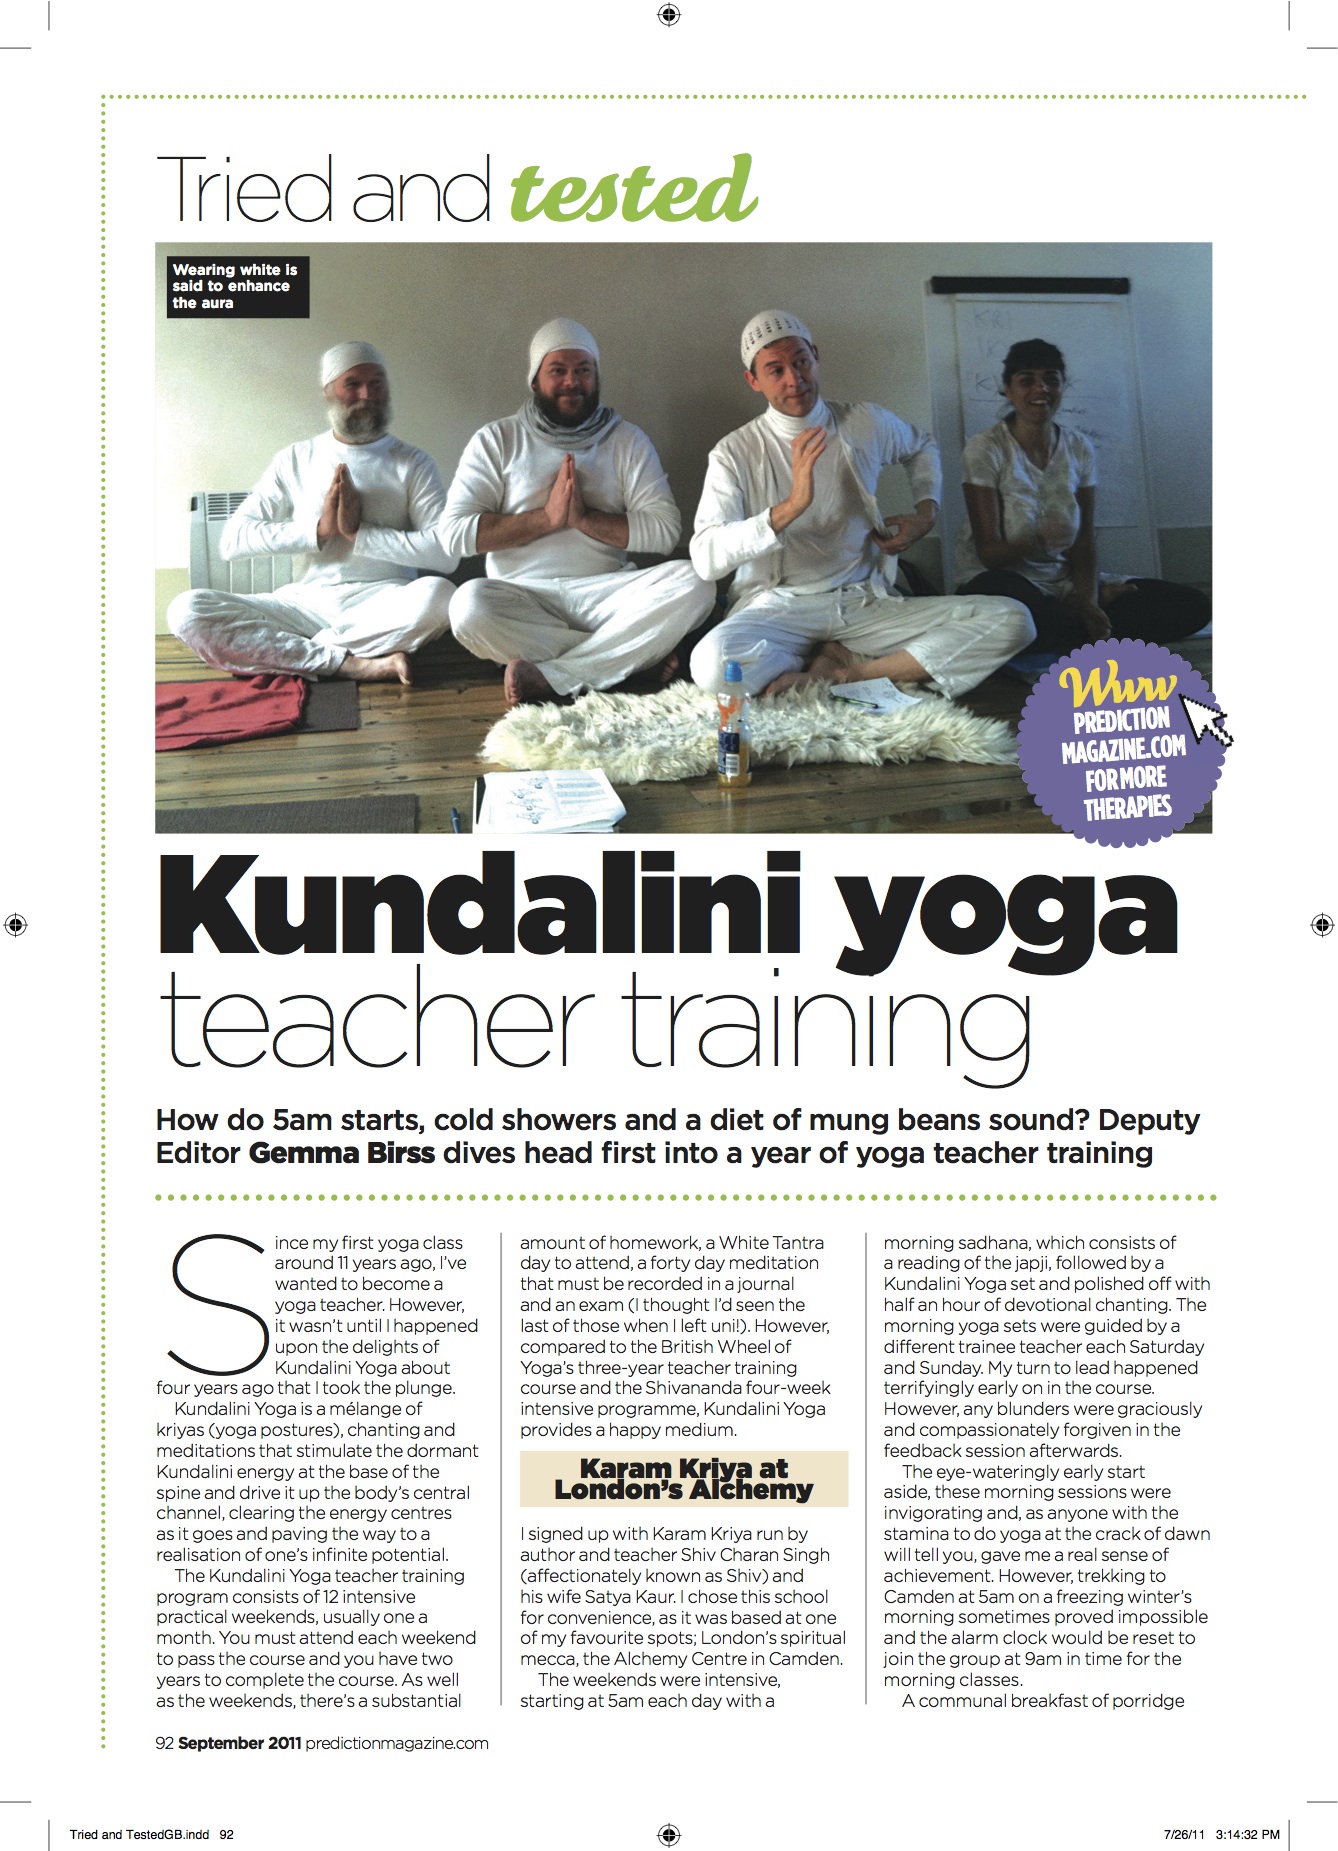 Kundalini yoga teacher training